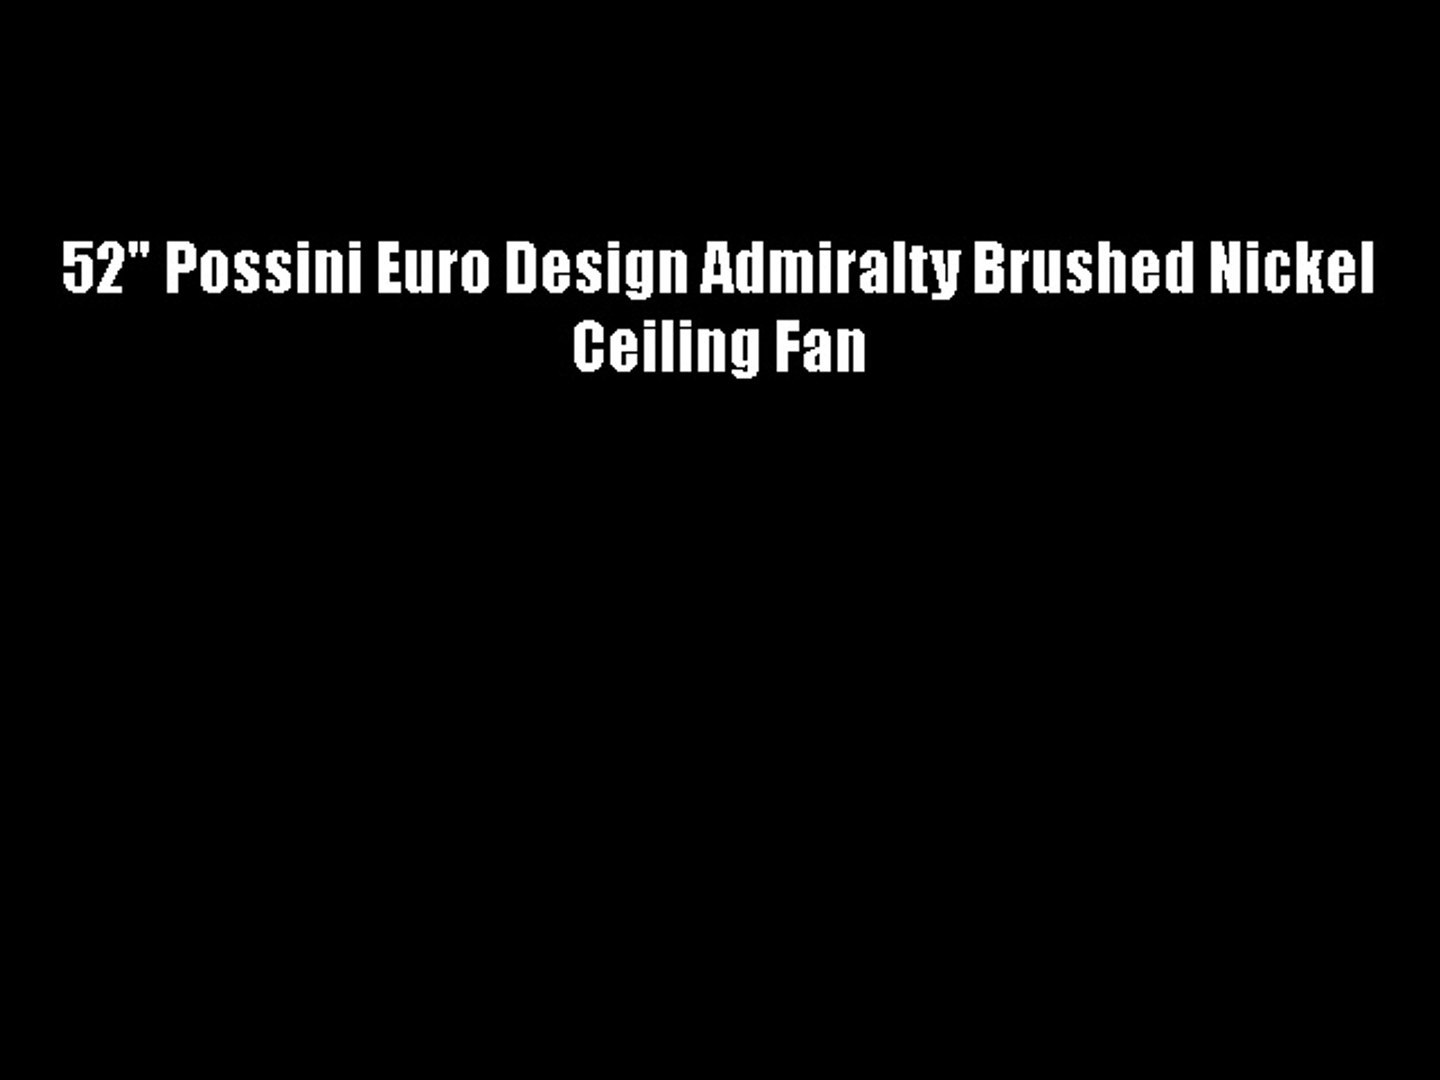 52 Possini Euro Design Admiralty Brushed Nickel Ceiling Fan